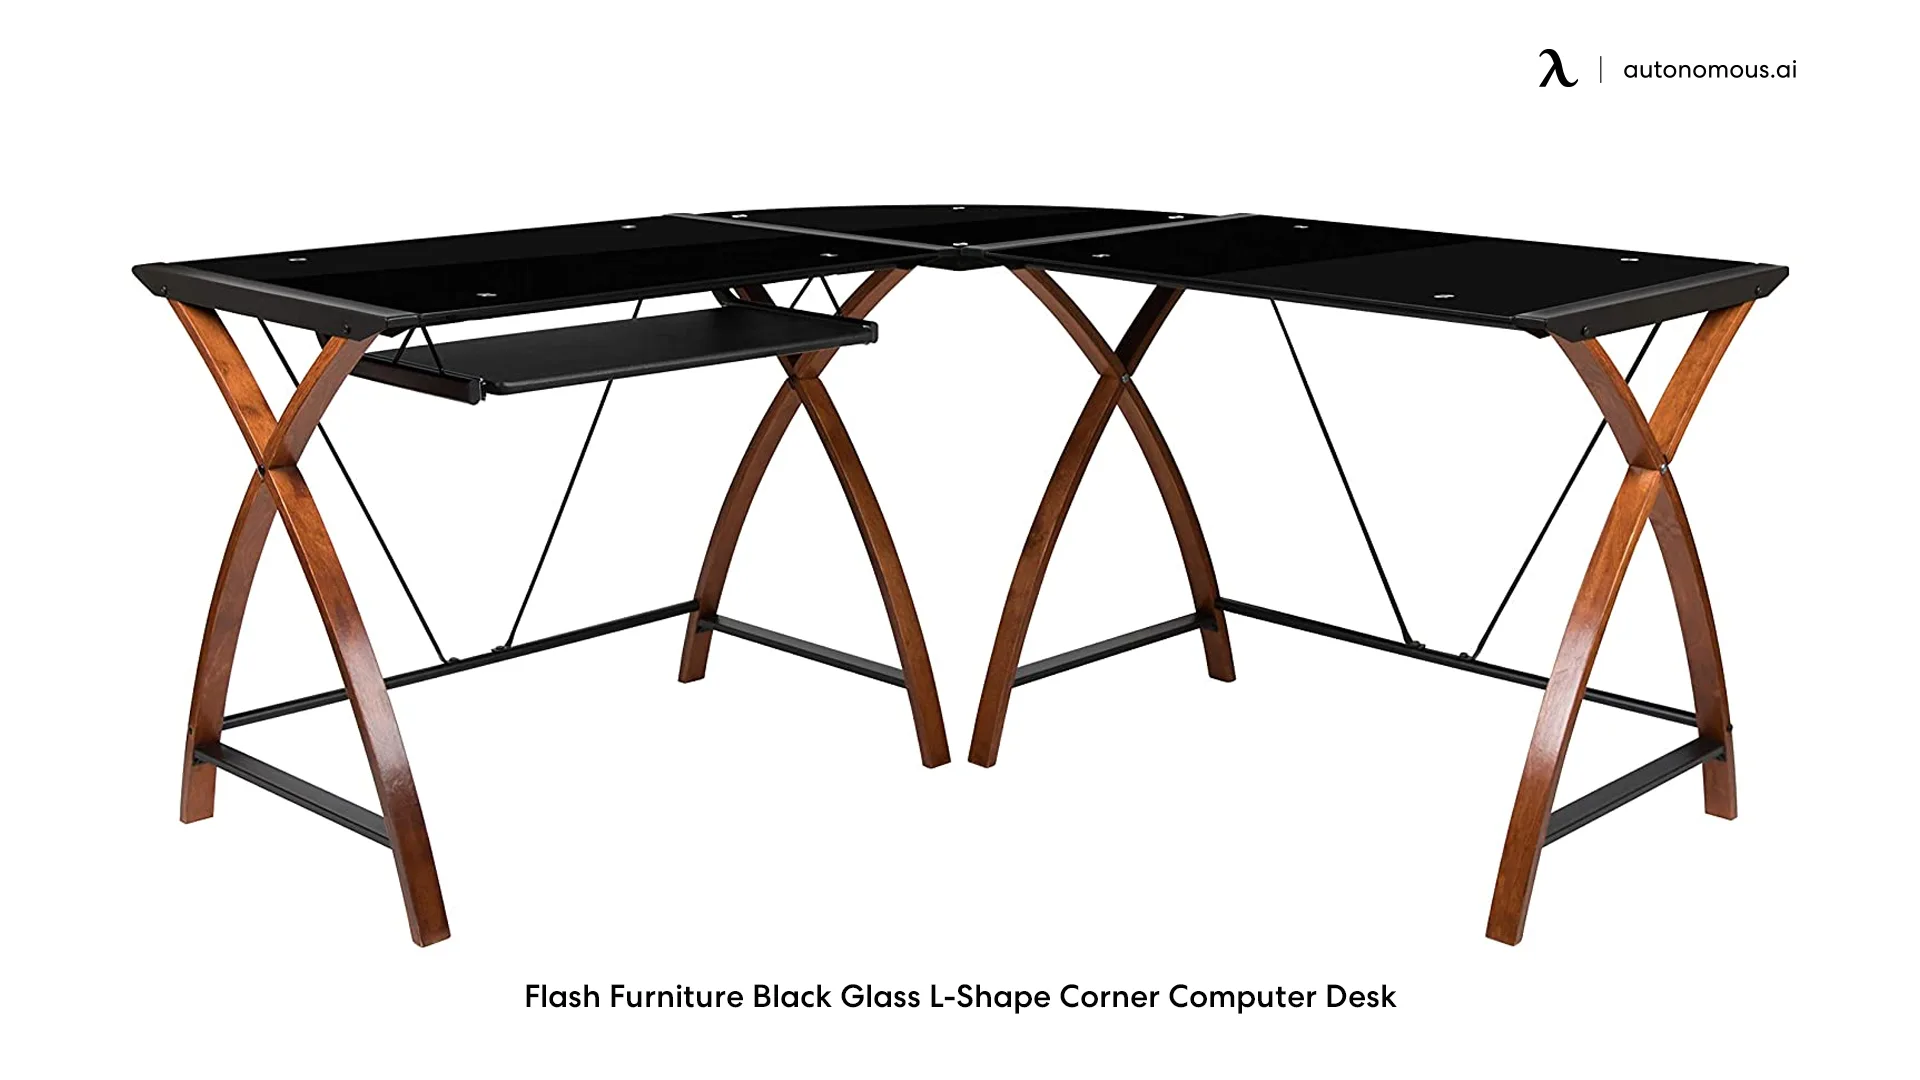 Flash Furniture Black Glass L-Shaped Corner Computer Desk